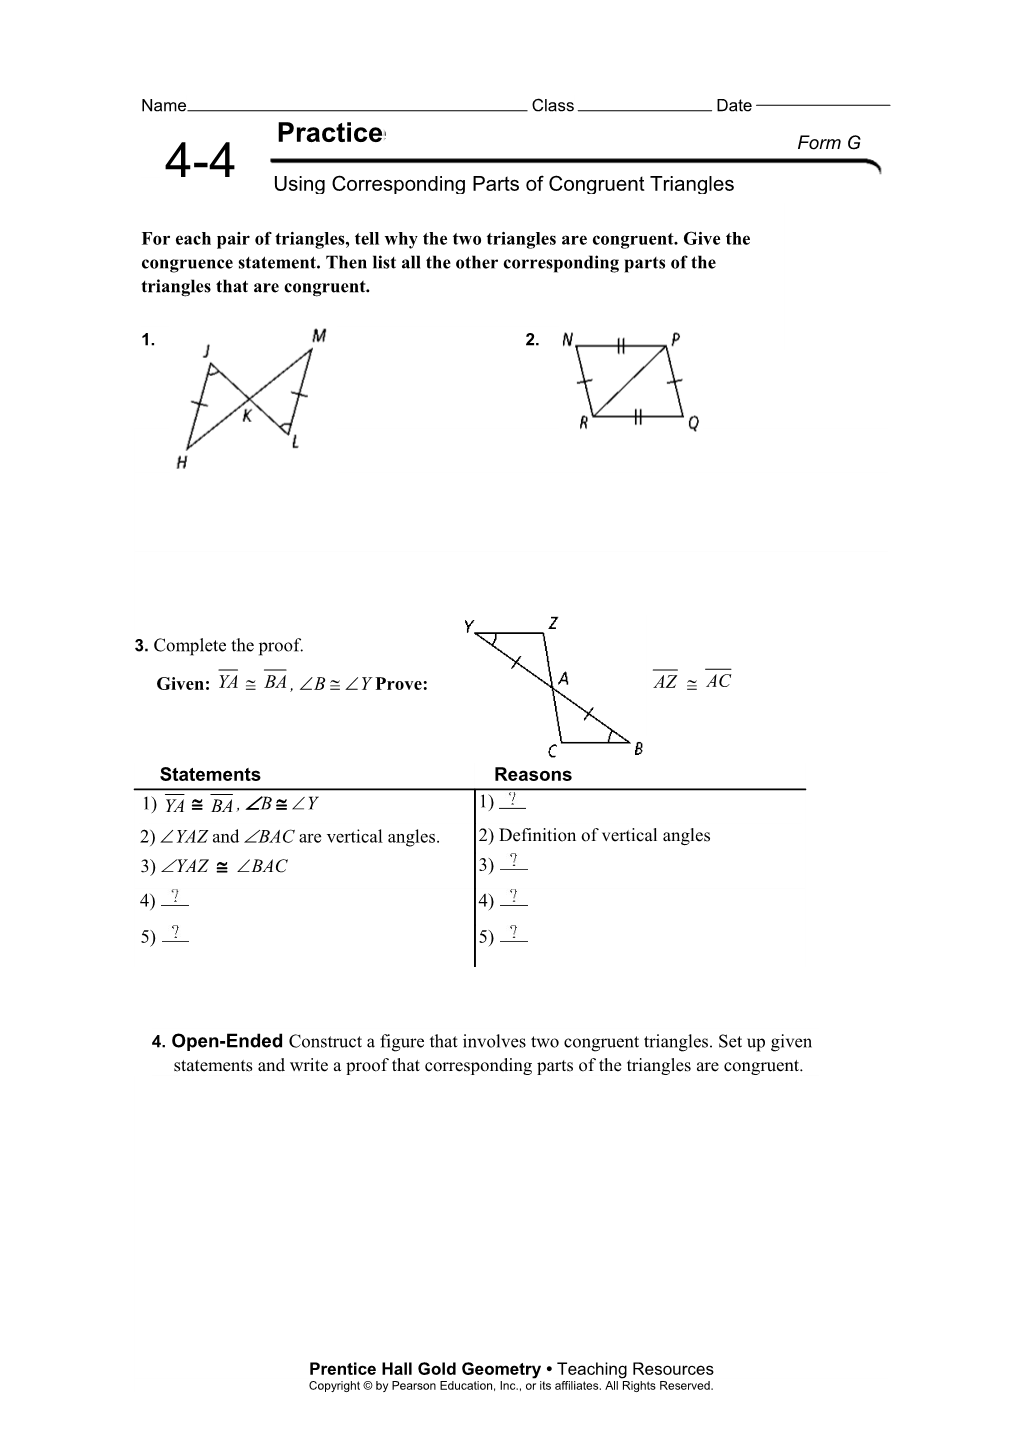 Using Corresponding Parts of Congruent Triangles